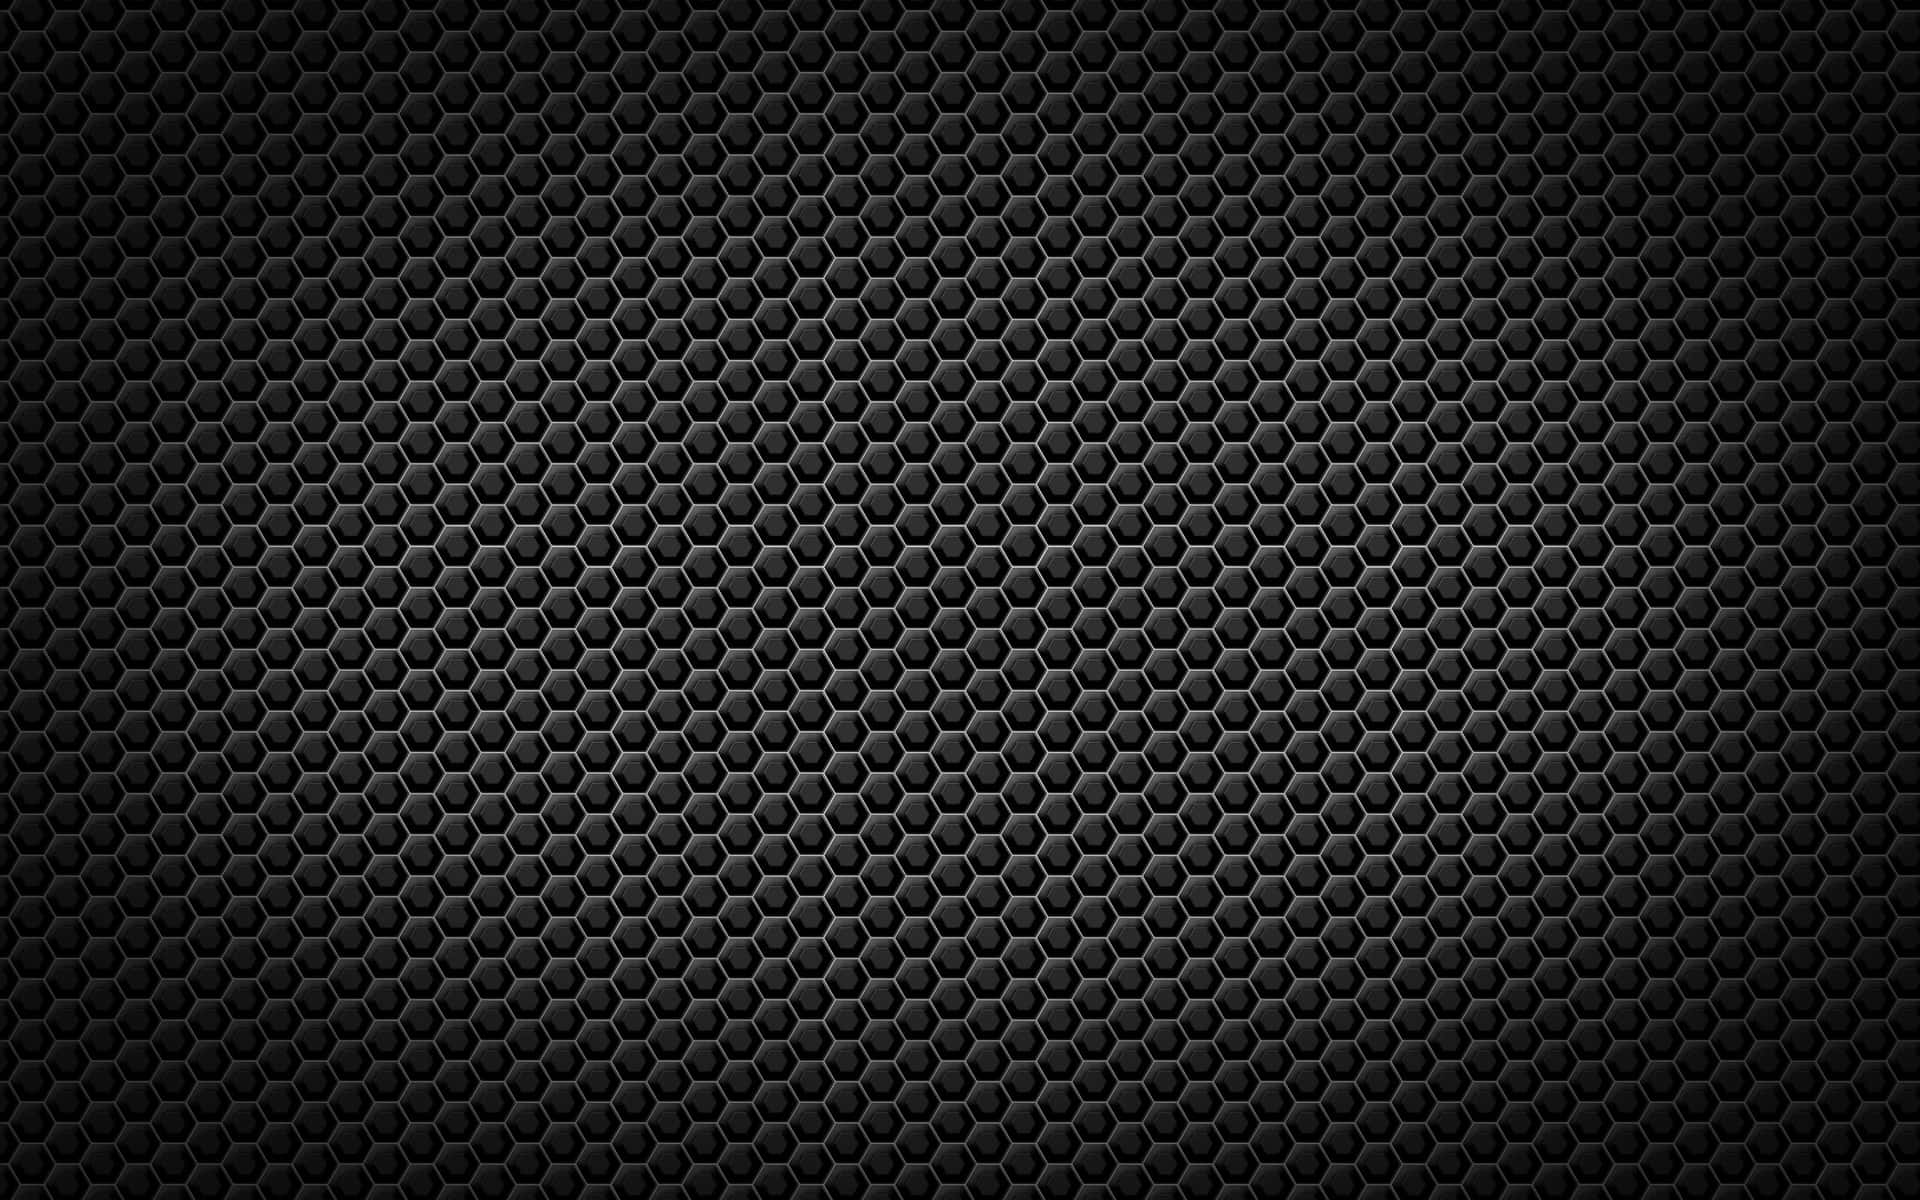 Plain Black Desktop With Hexagon Patterns Wallpaper